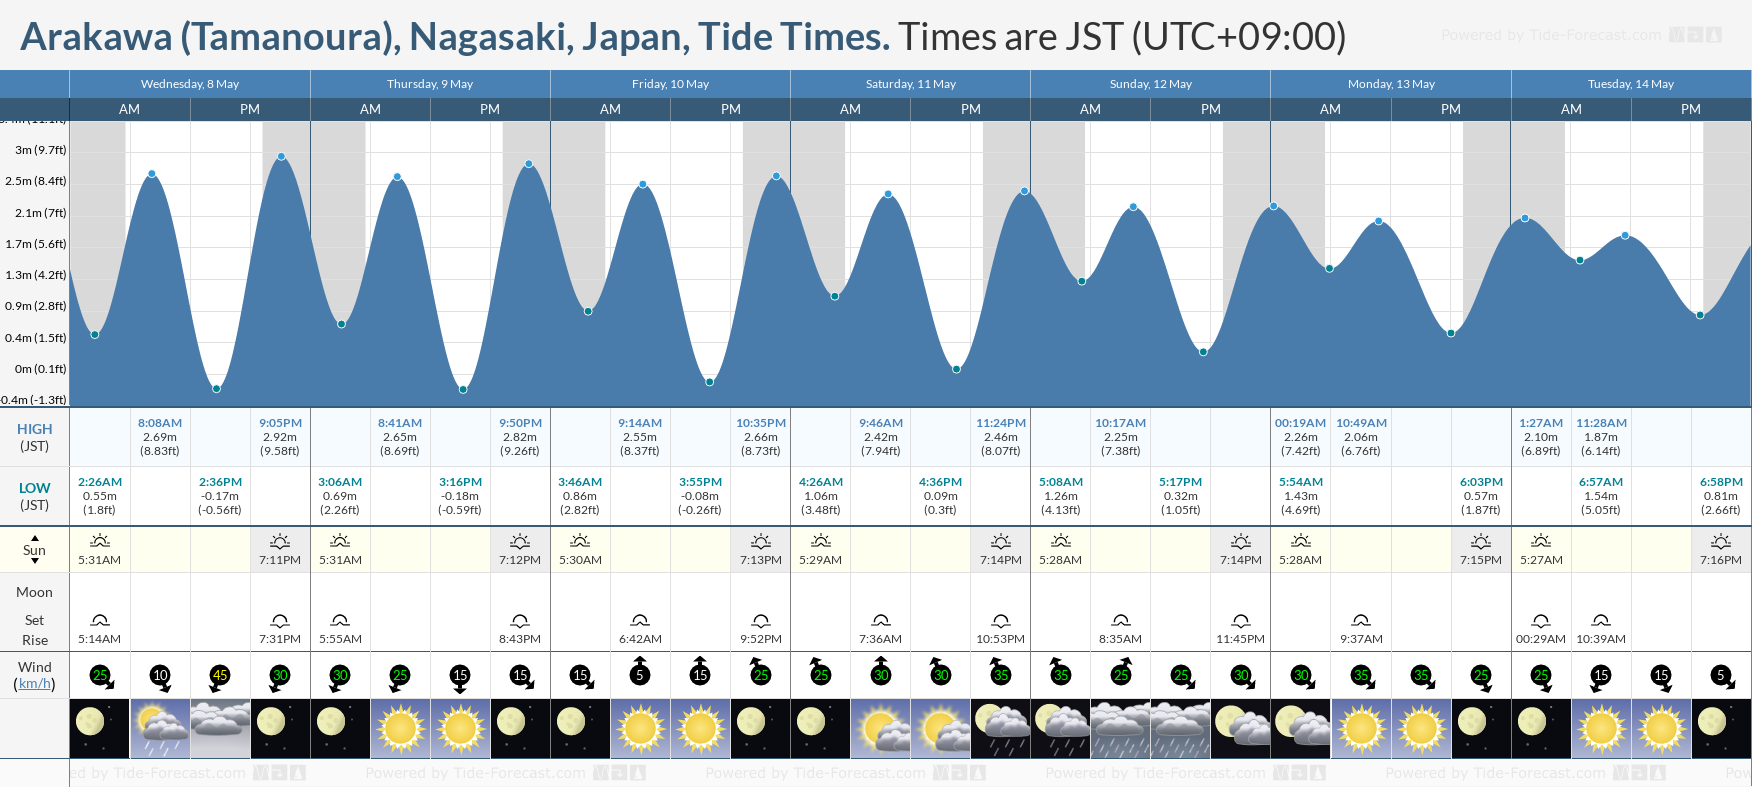 Arakawa (Tamanoura), Nagasaki, Japan Tide Chart including high and low tide tide times for the next 7 days